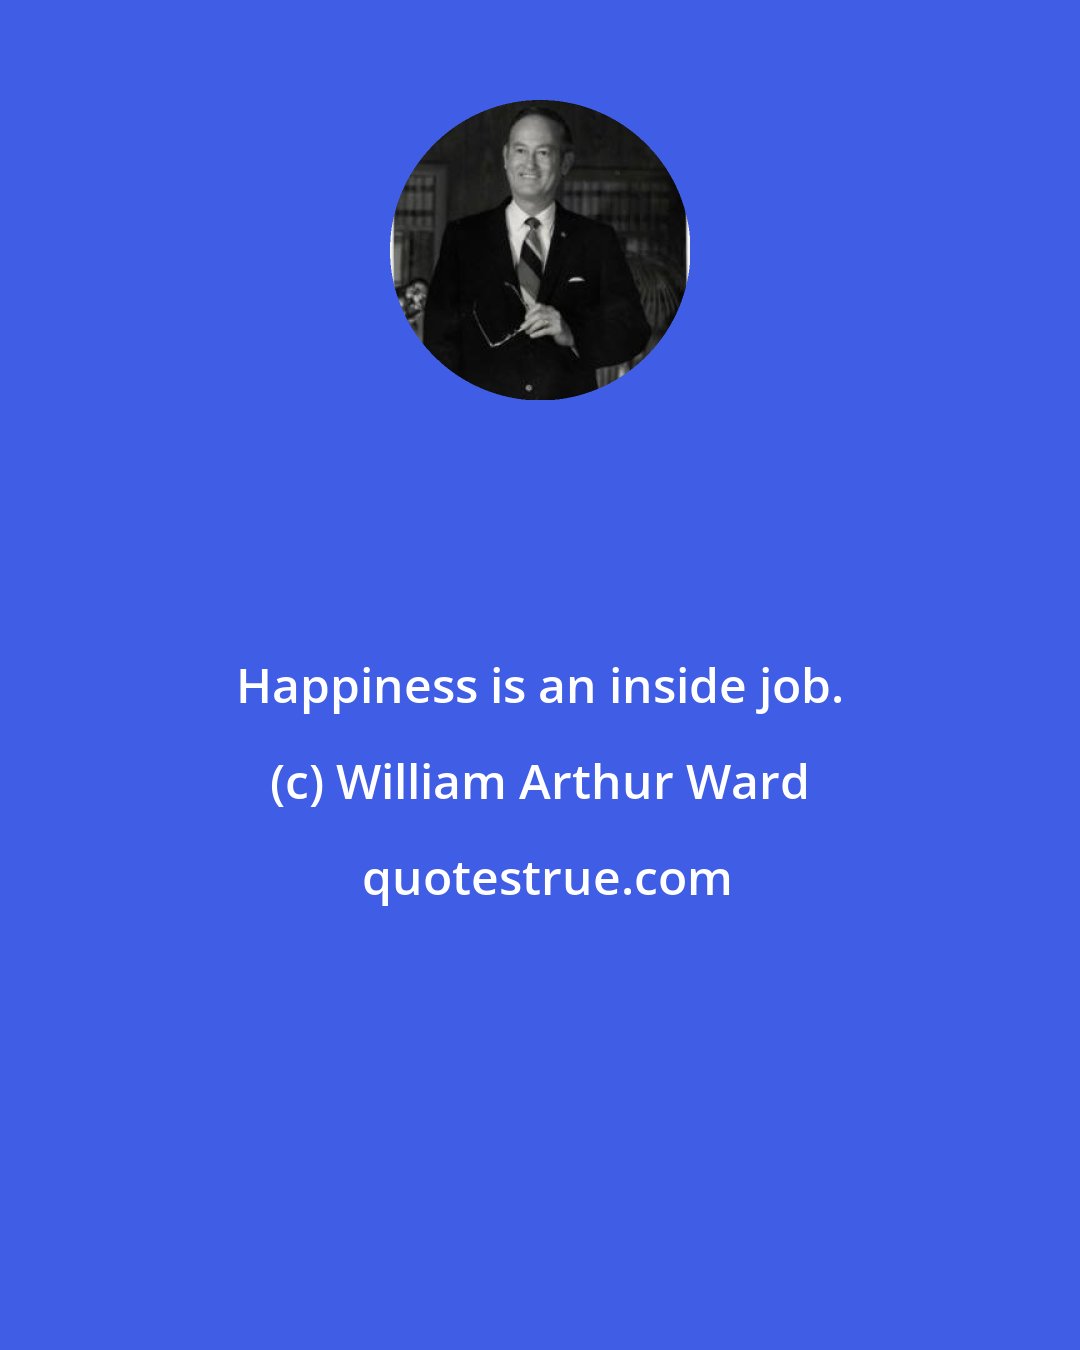 William Arthur Ward: Happiness is an inside job.